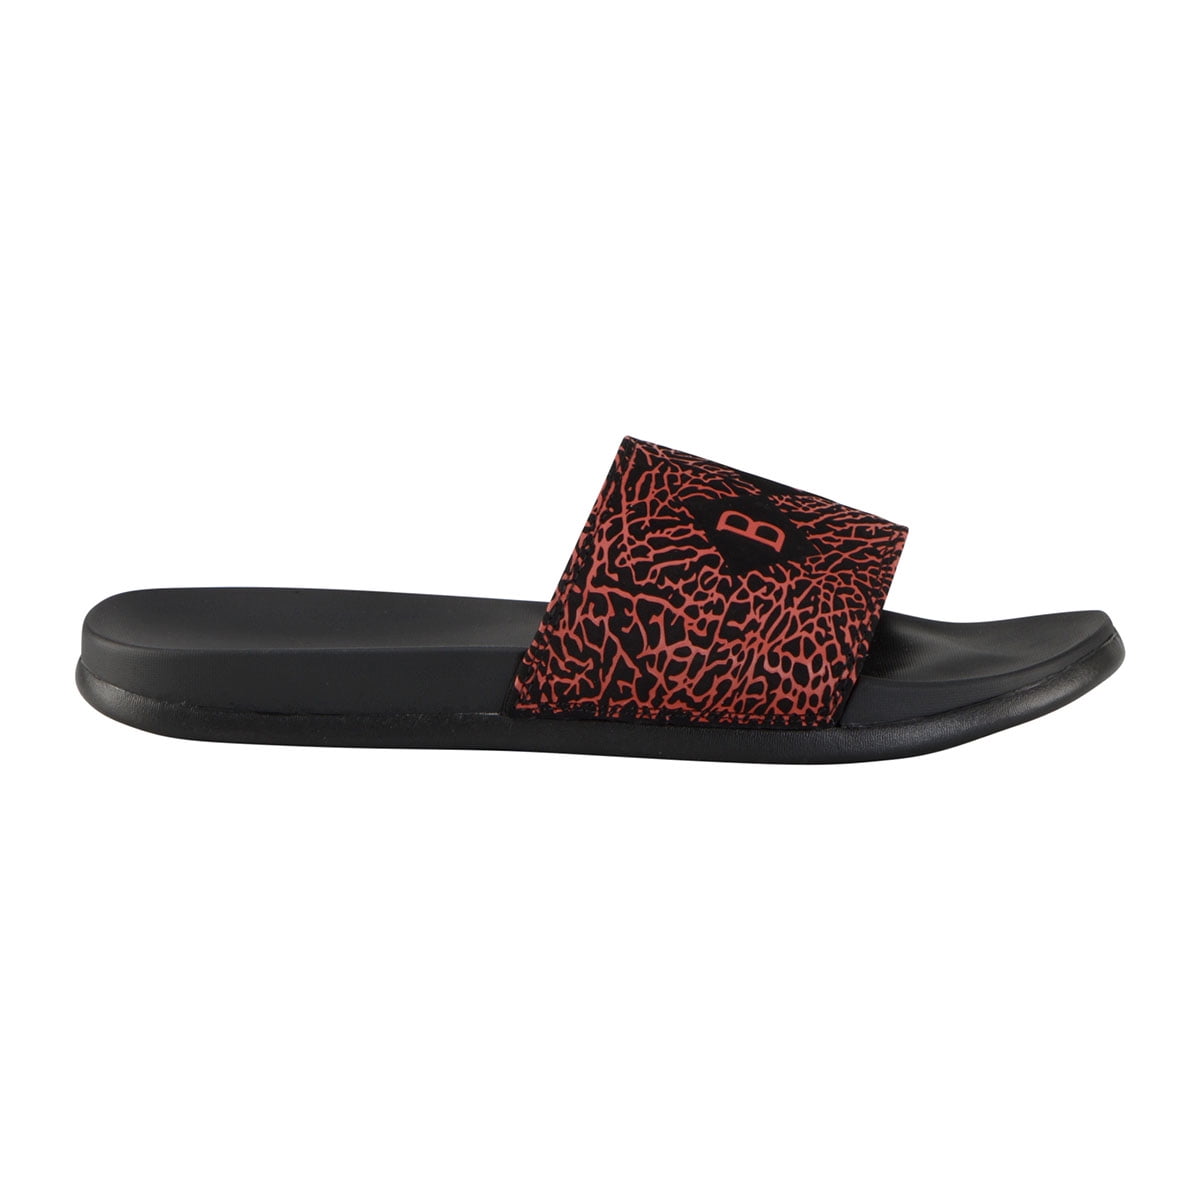 B-grade Lacoste Croco 219 1 CMA Sandals Flip Flops Pool Red 